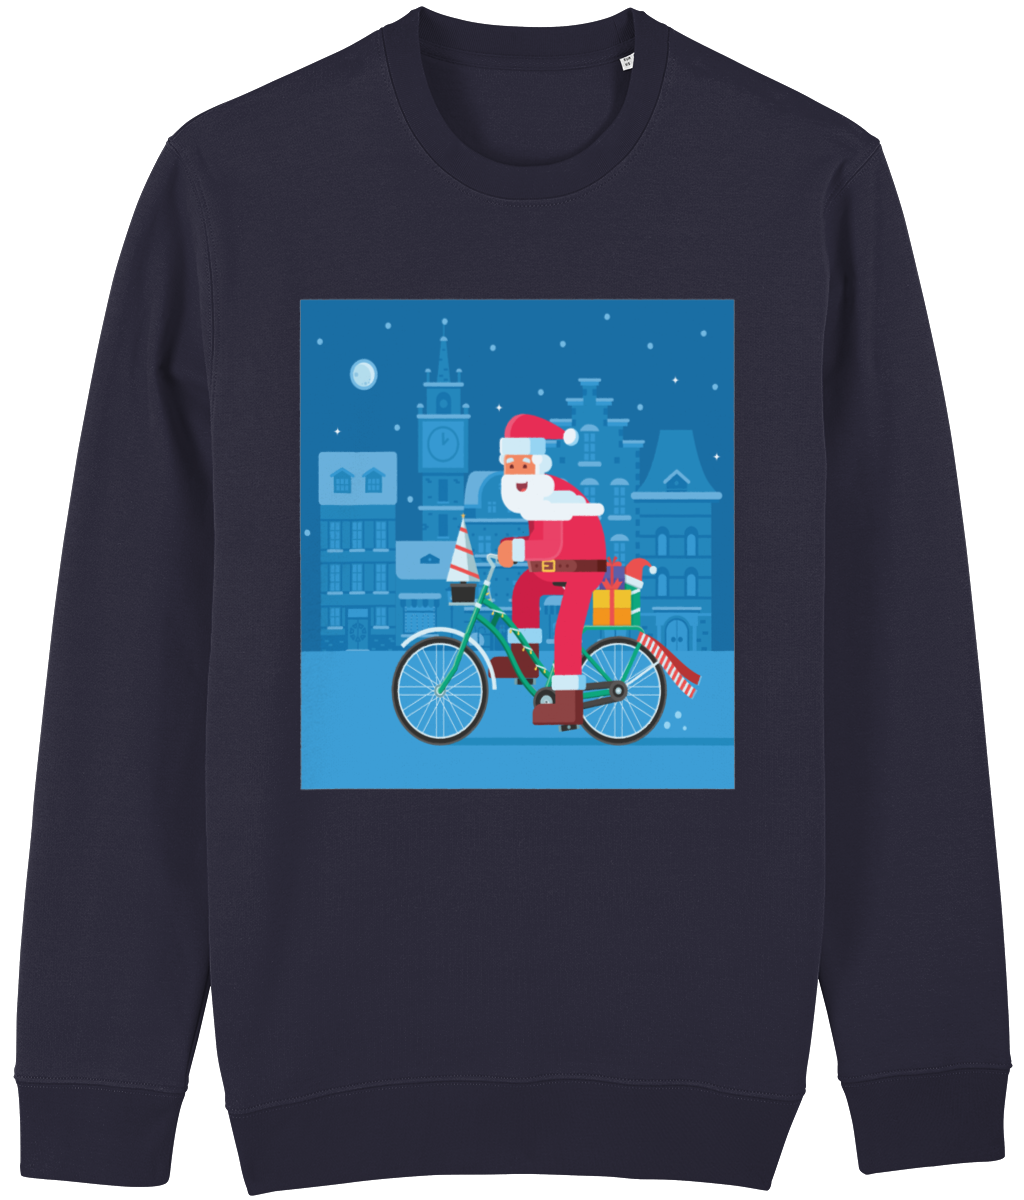 Santa on a Bike Sweatshirt - Unisex